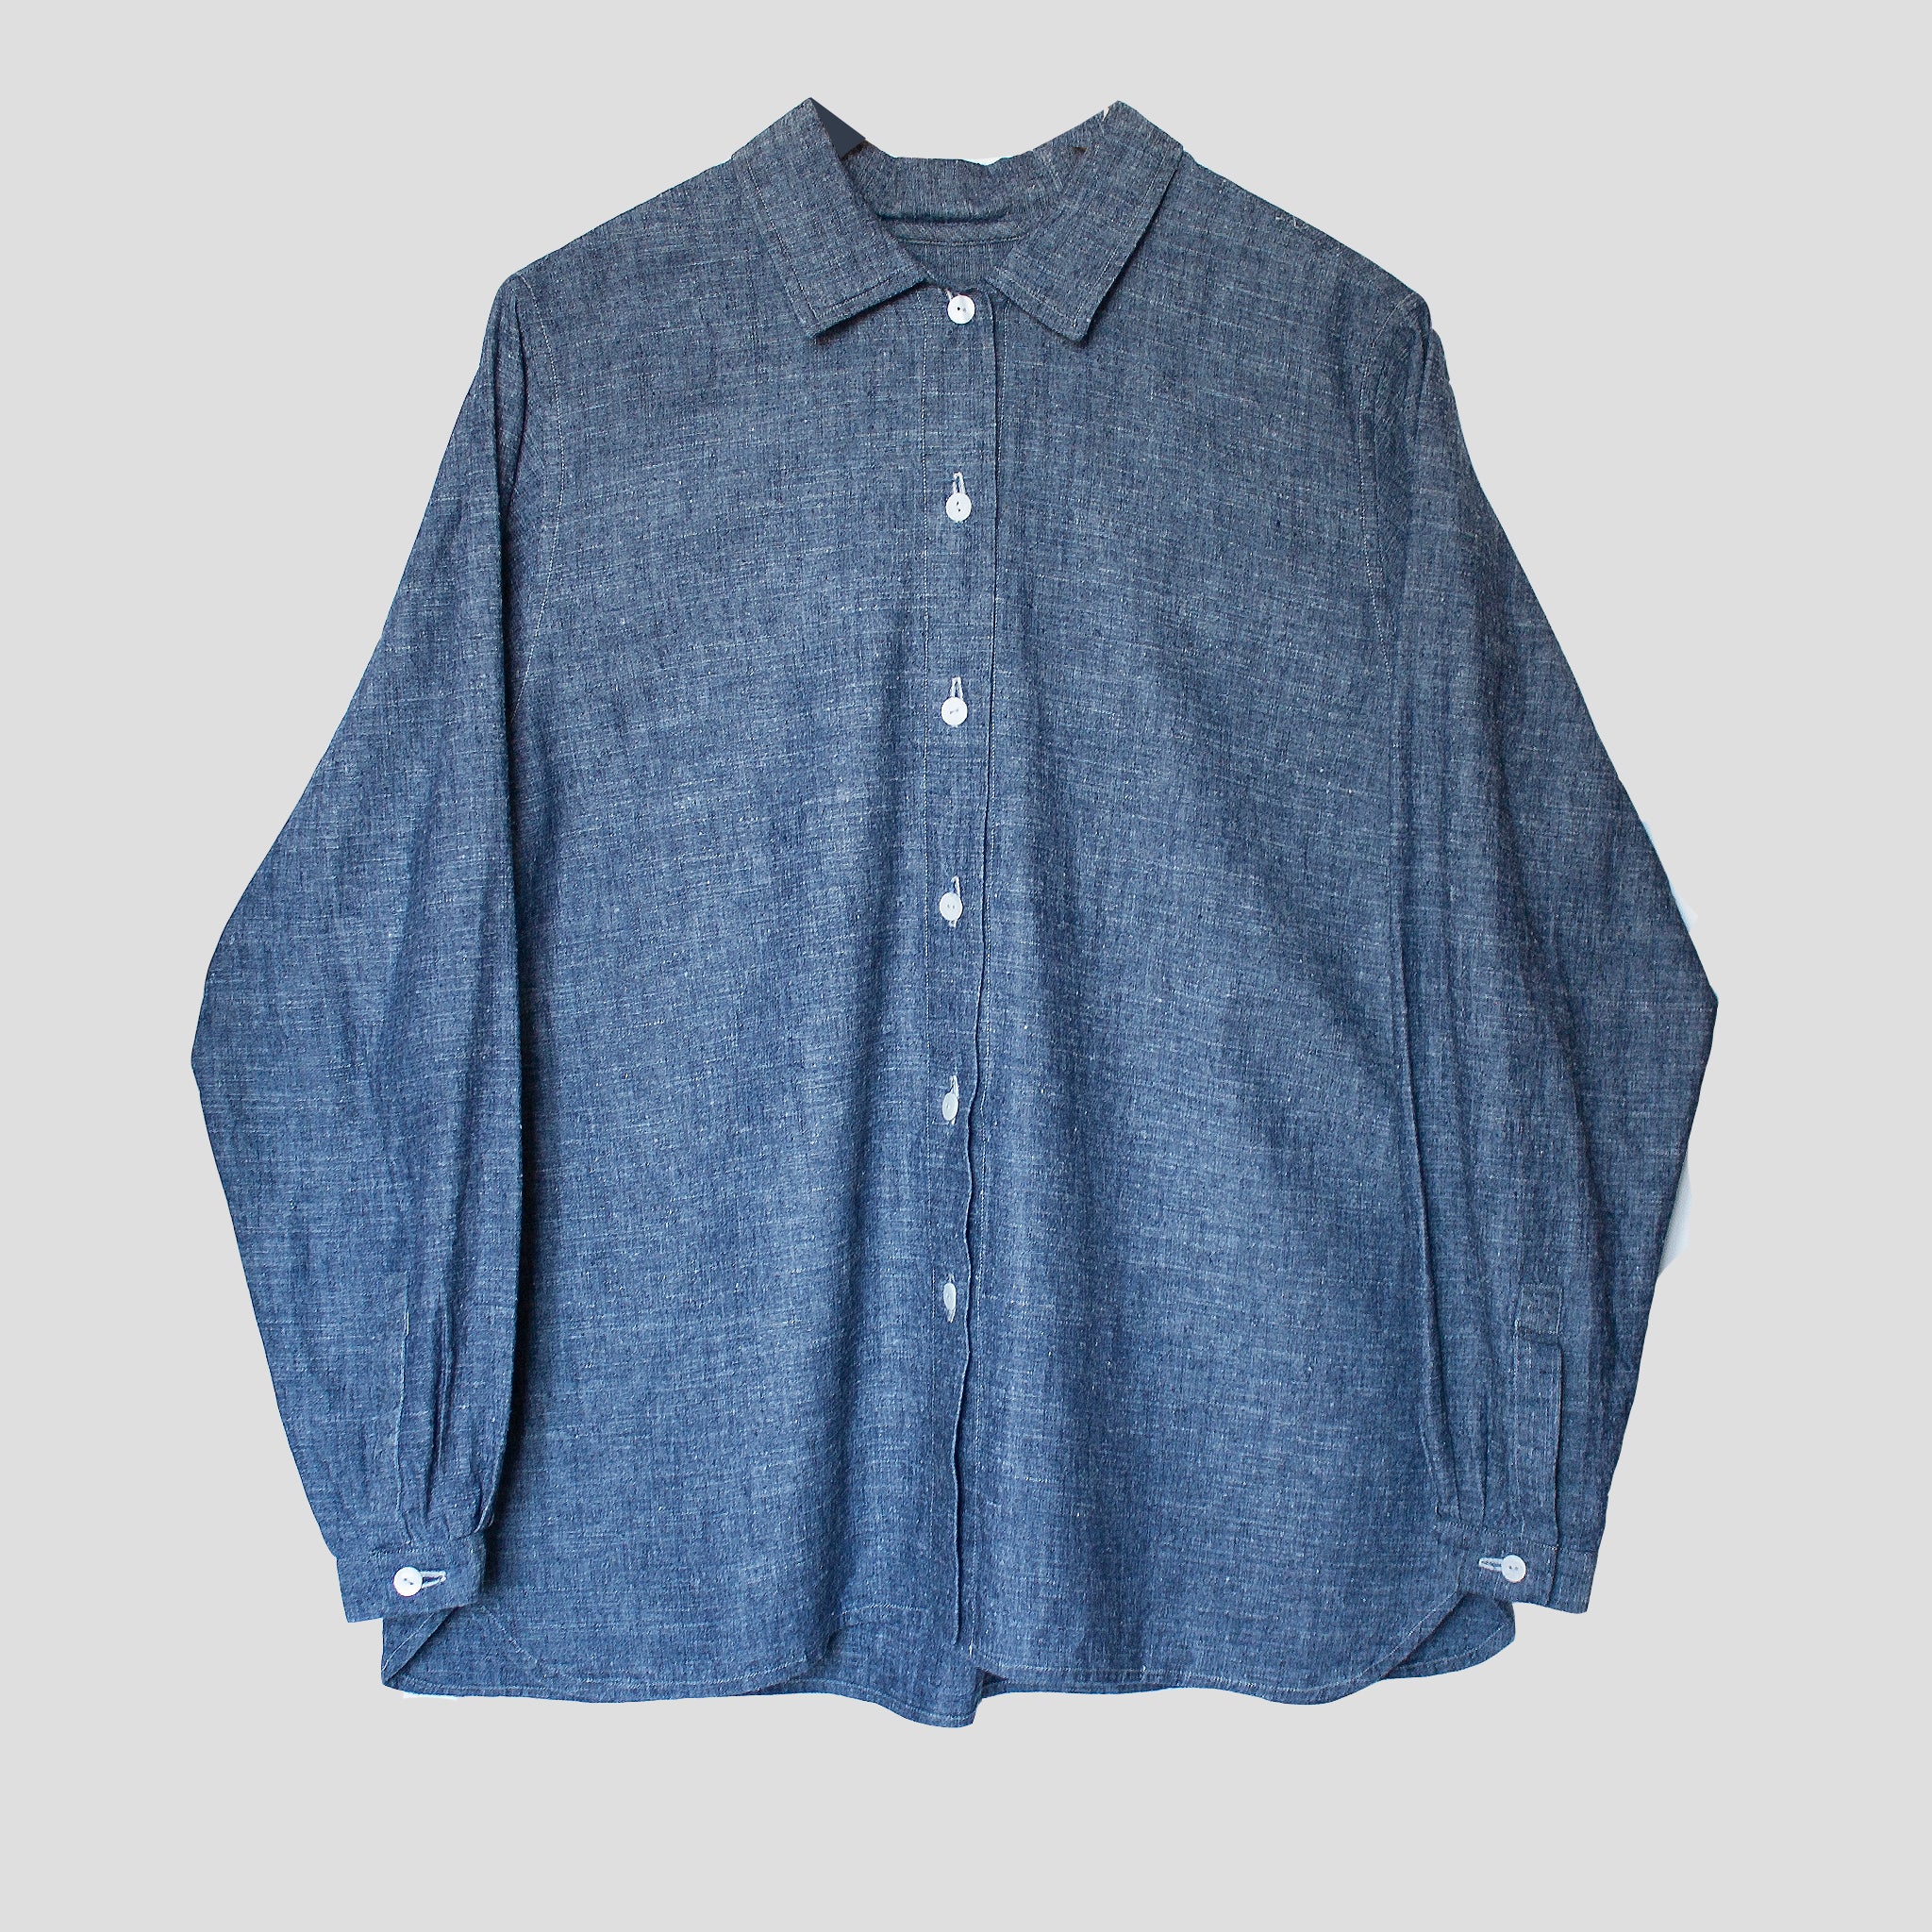 Bridewell shirt in blue cotton/hemp